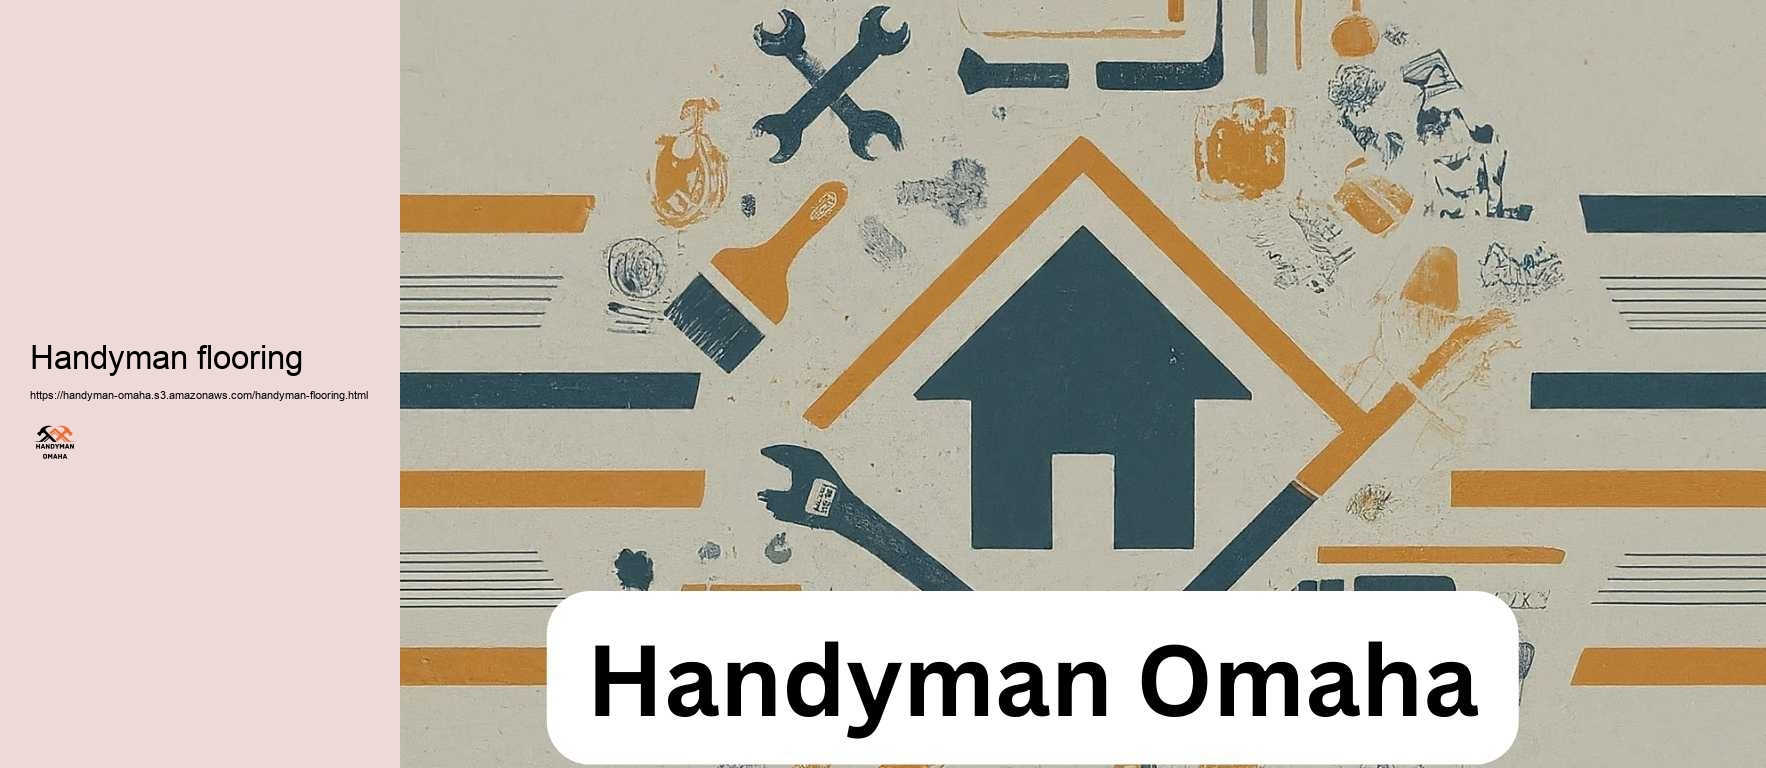 Handyman flooring